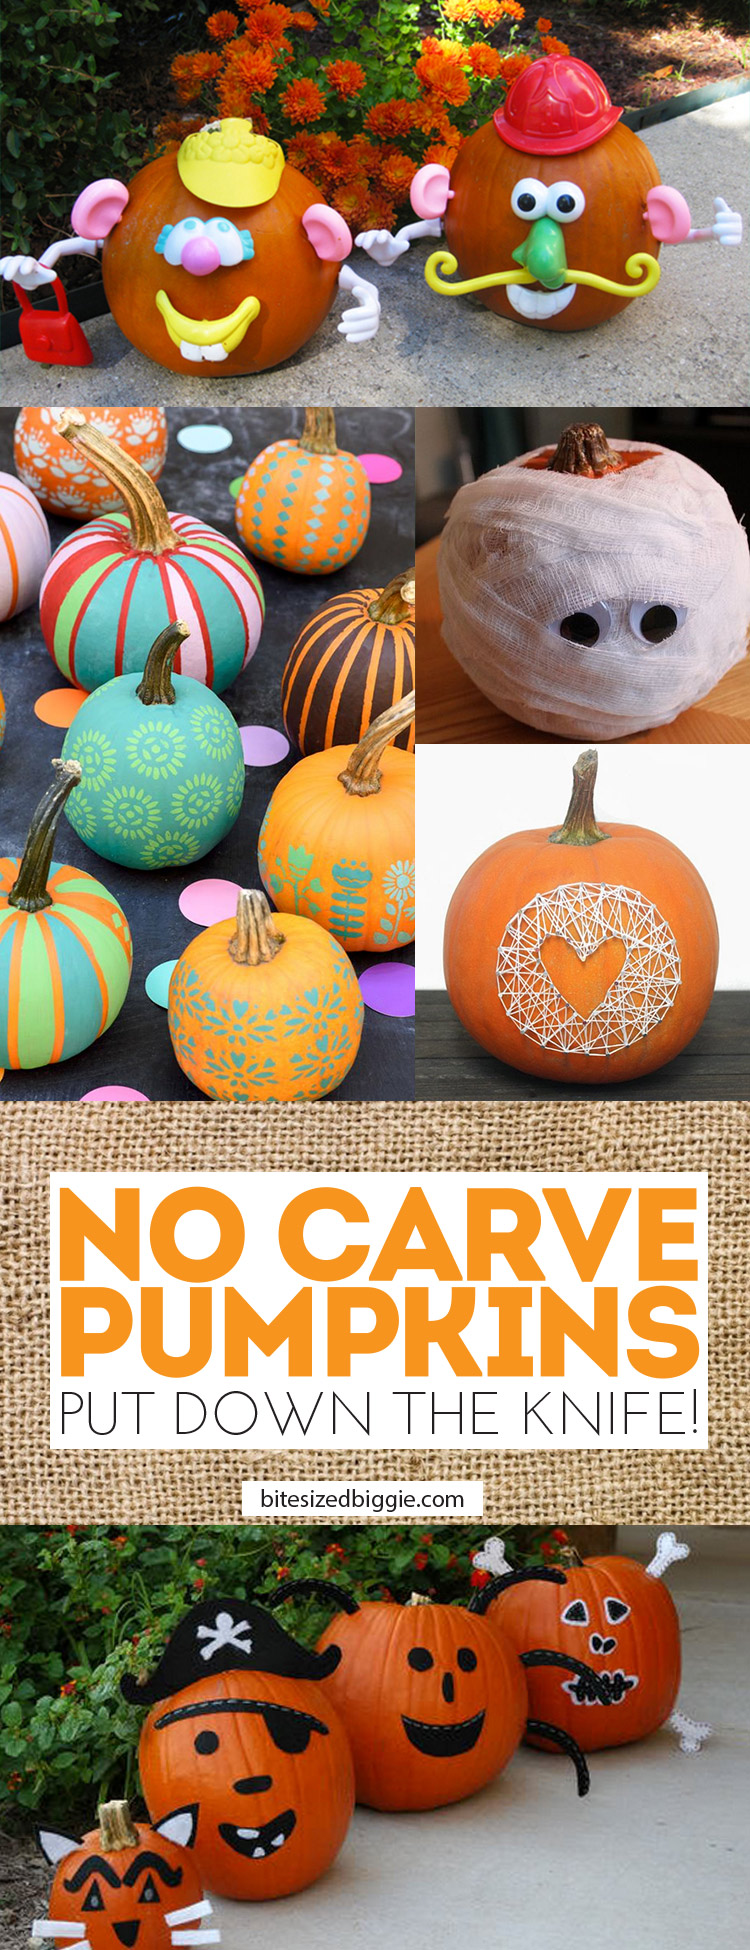 No carve pumpkins - PUT DOWN THAT KNIFE! Hahahaha!